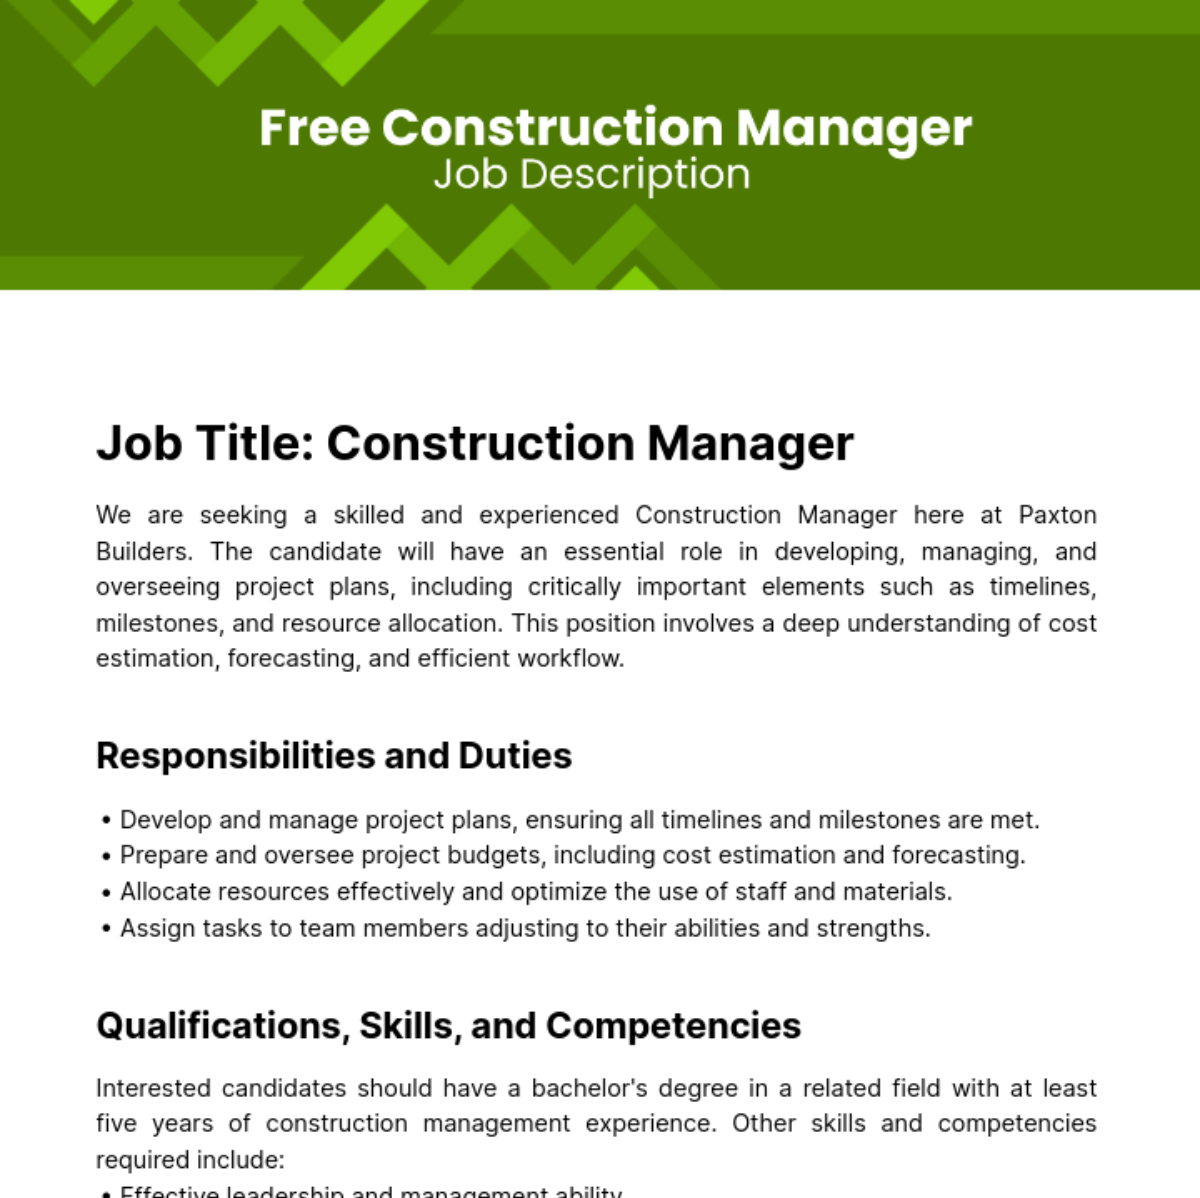 Free Construction Manager Job Description Template